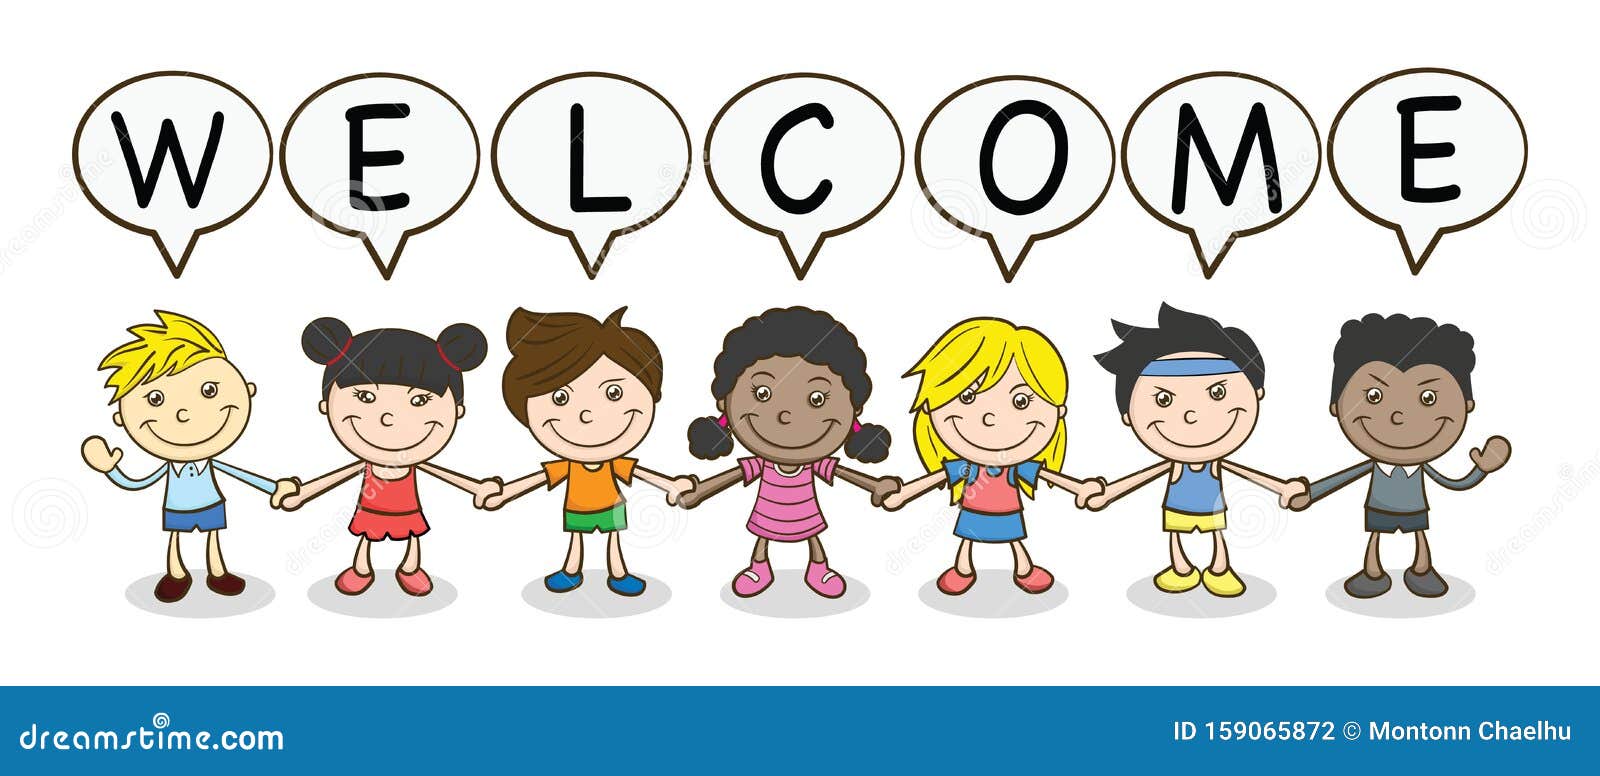 Welcome-kids Vector Illustration | CartoonDealer.com #31866078